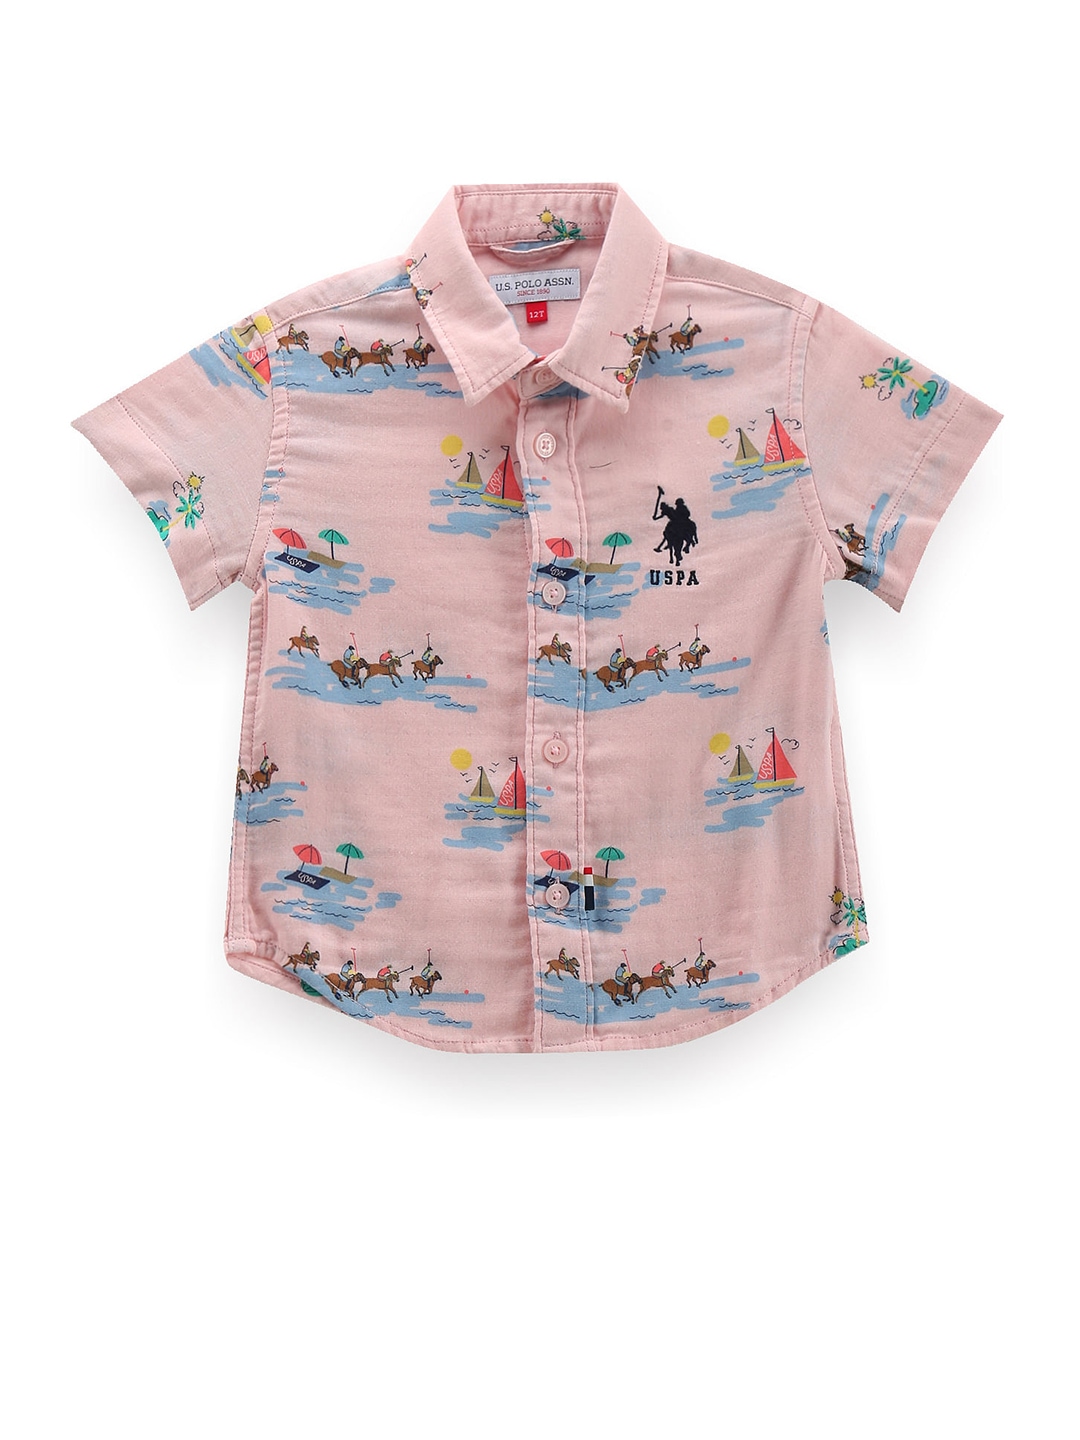 

U.S. Polo Assn. Kids Boys Classic Conversational Printed Pure Cotton Casual Shirt, Pink